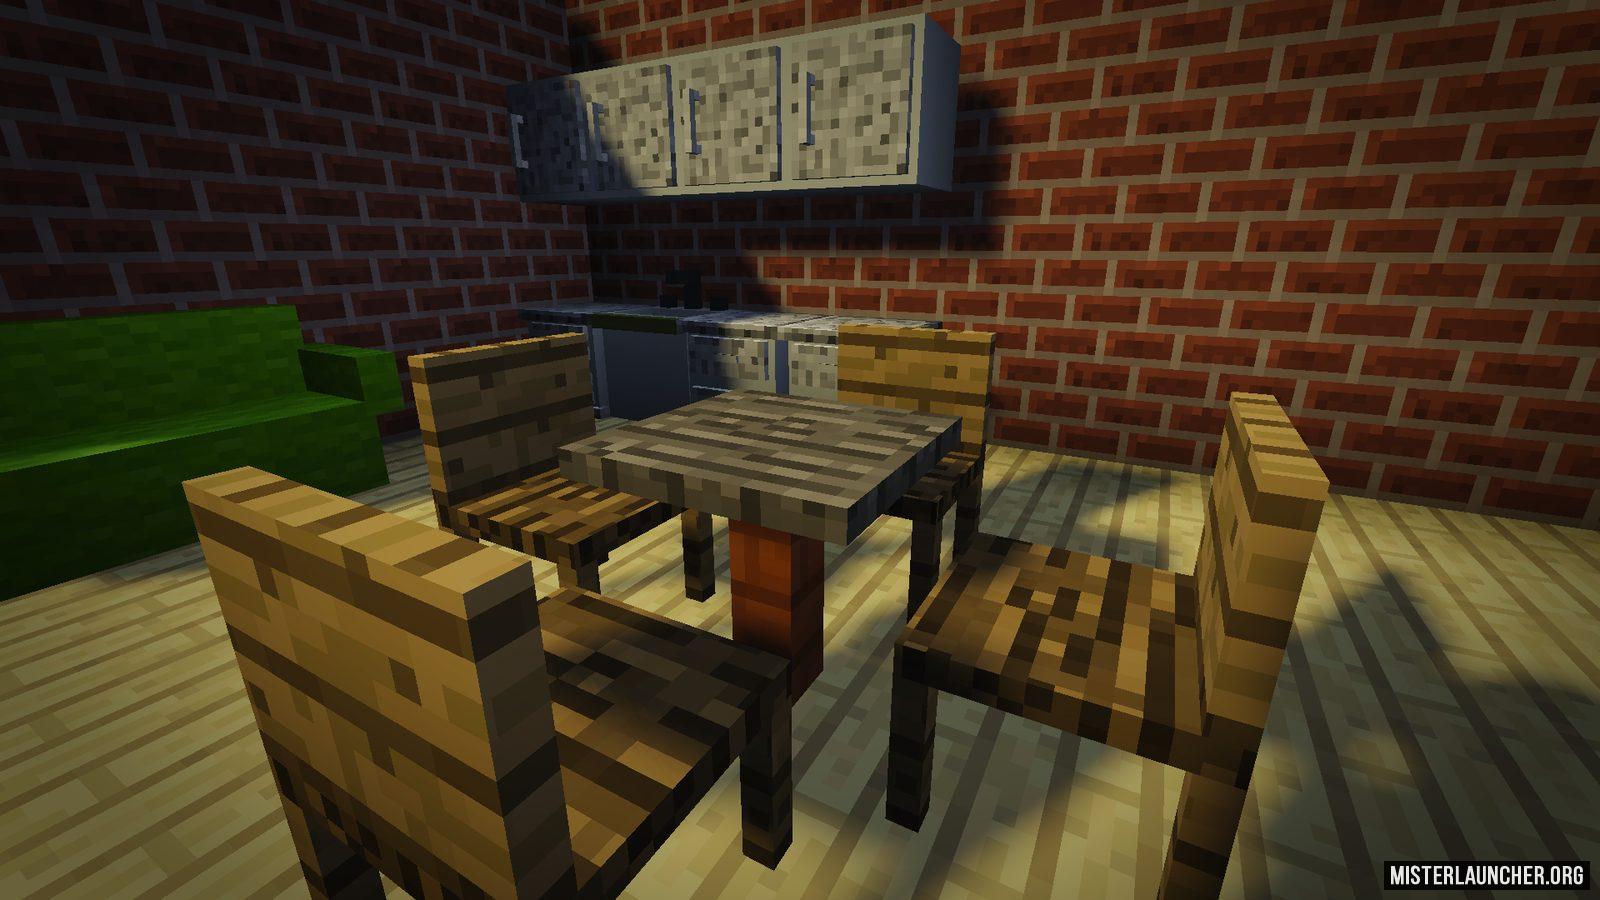 Download Mod Mrcrayfish S Furniture Mod For Minecraft 1 16 5 1 16 4 1 16 1 1 12 2 1 7 10